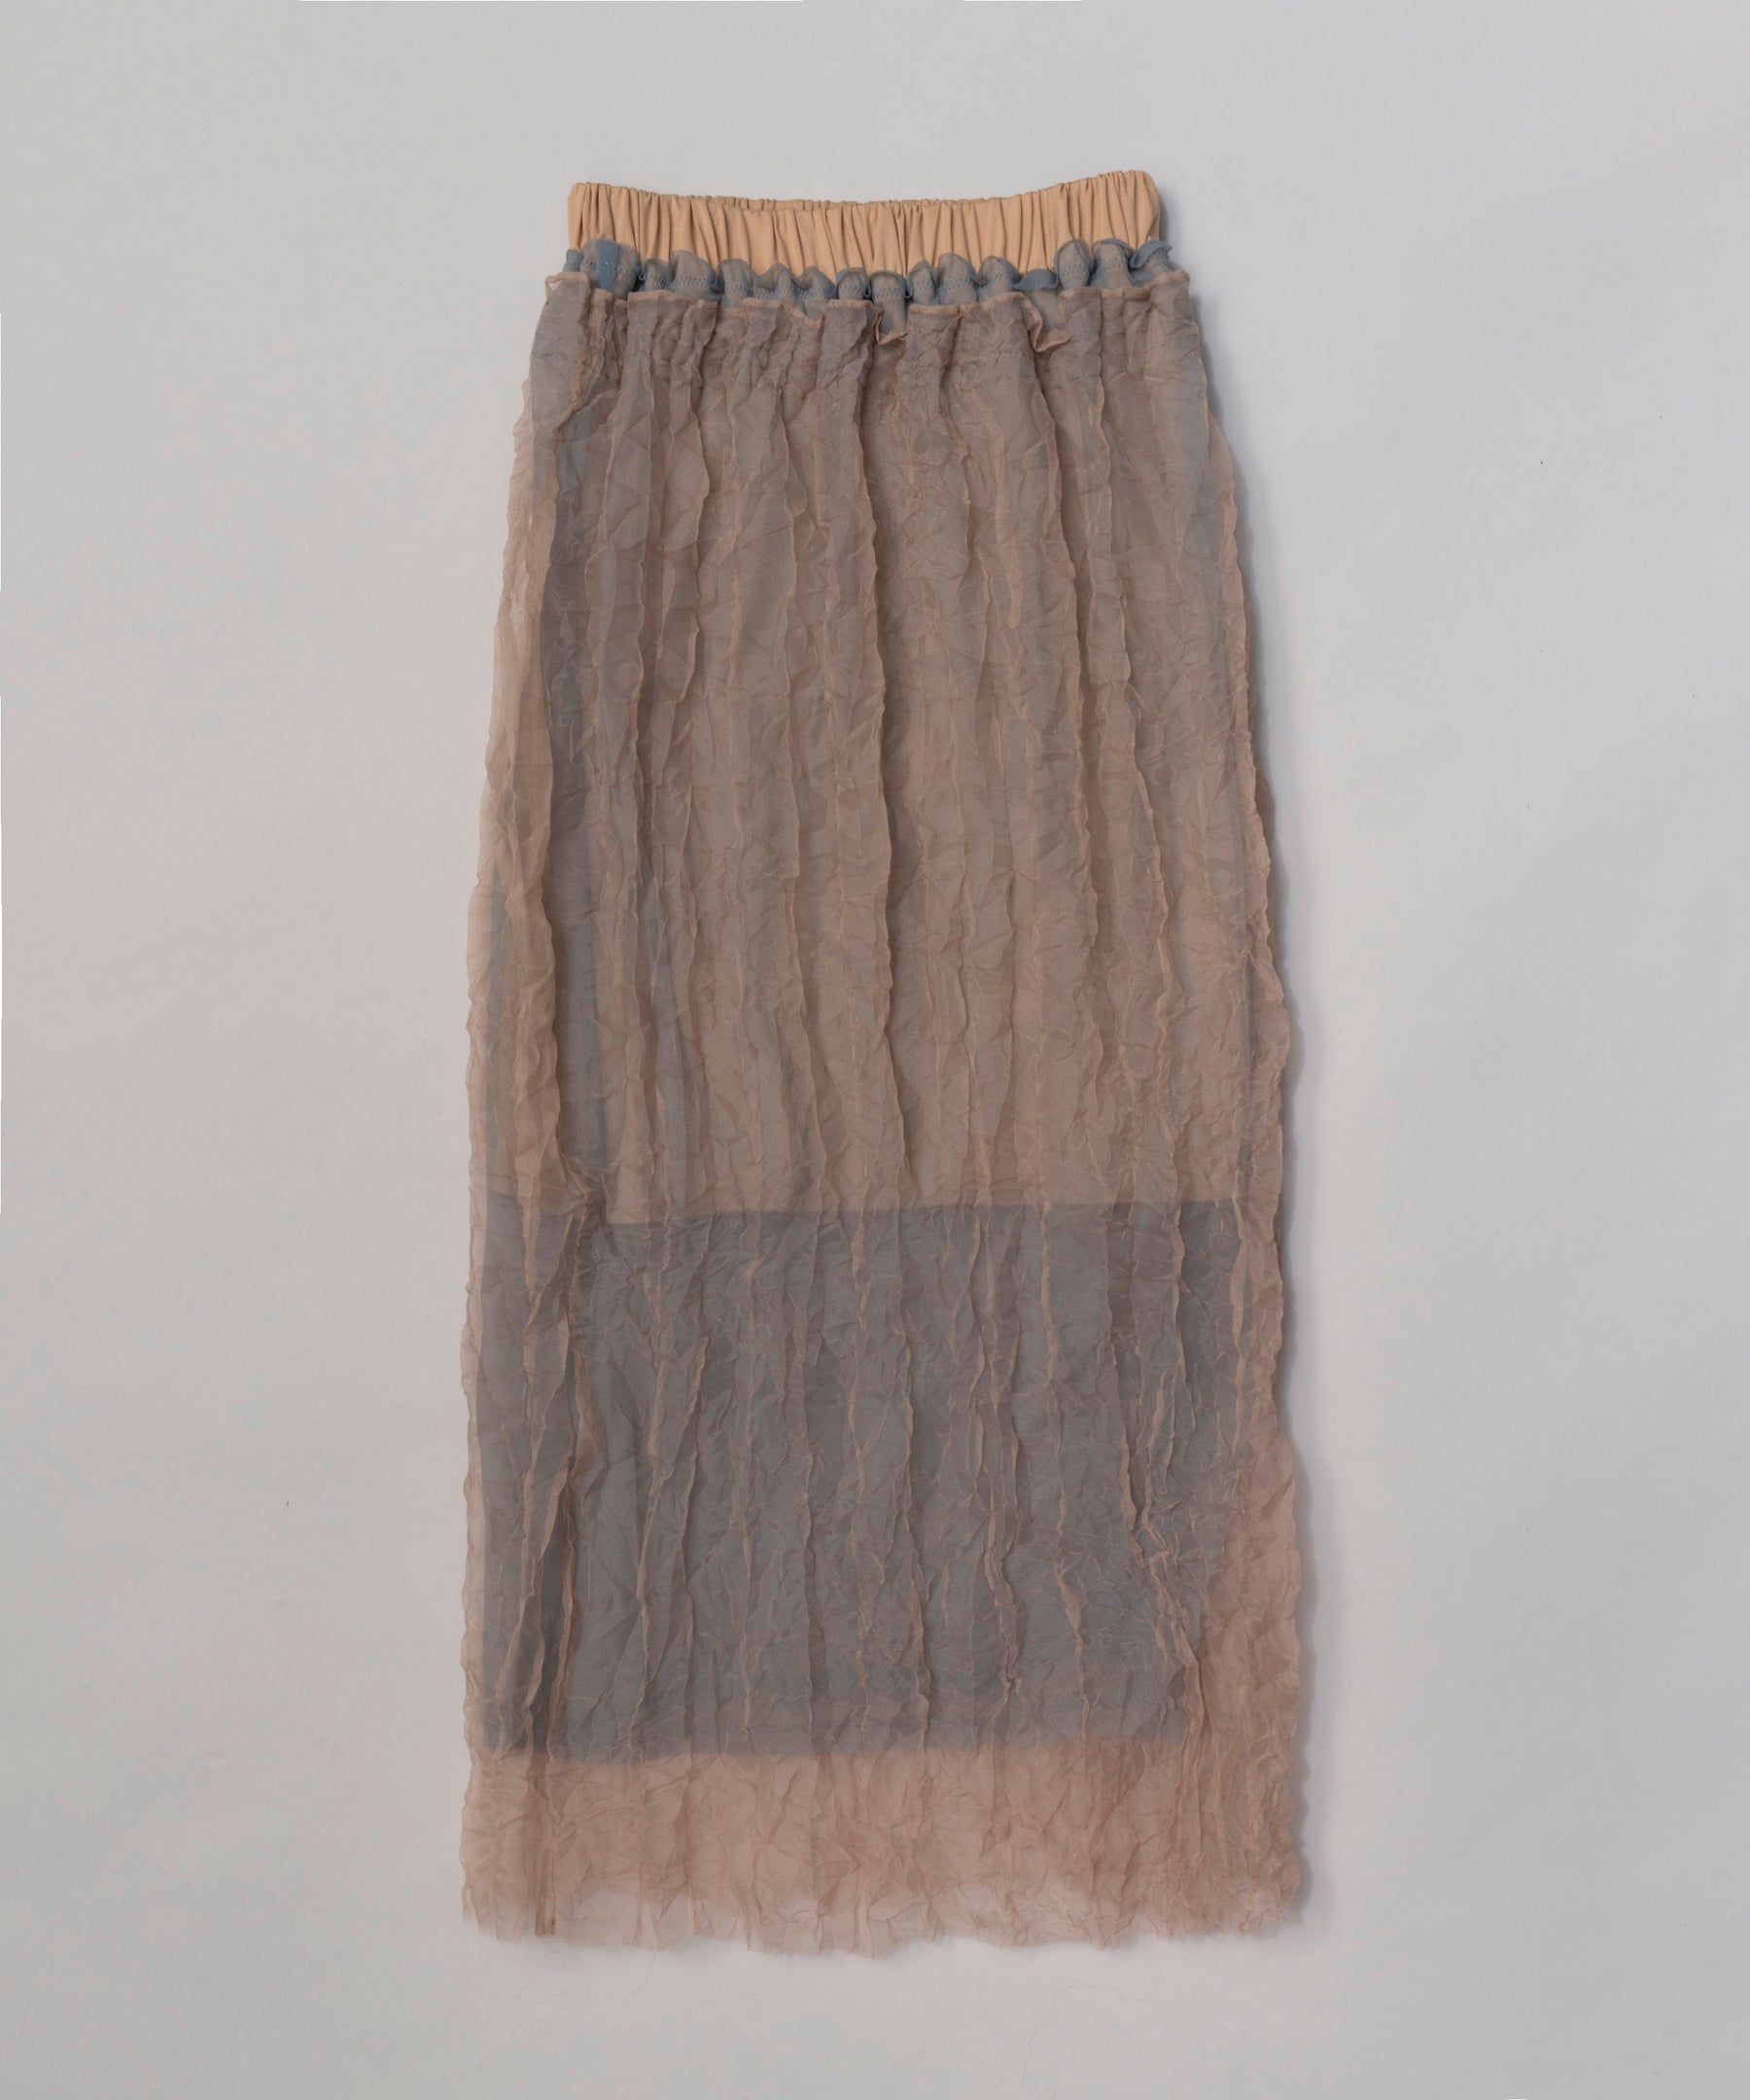 【SALE】Sheer Layered Washer Skirt